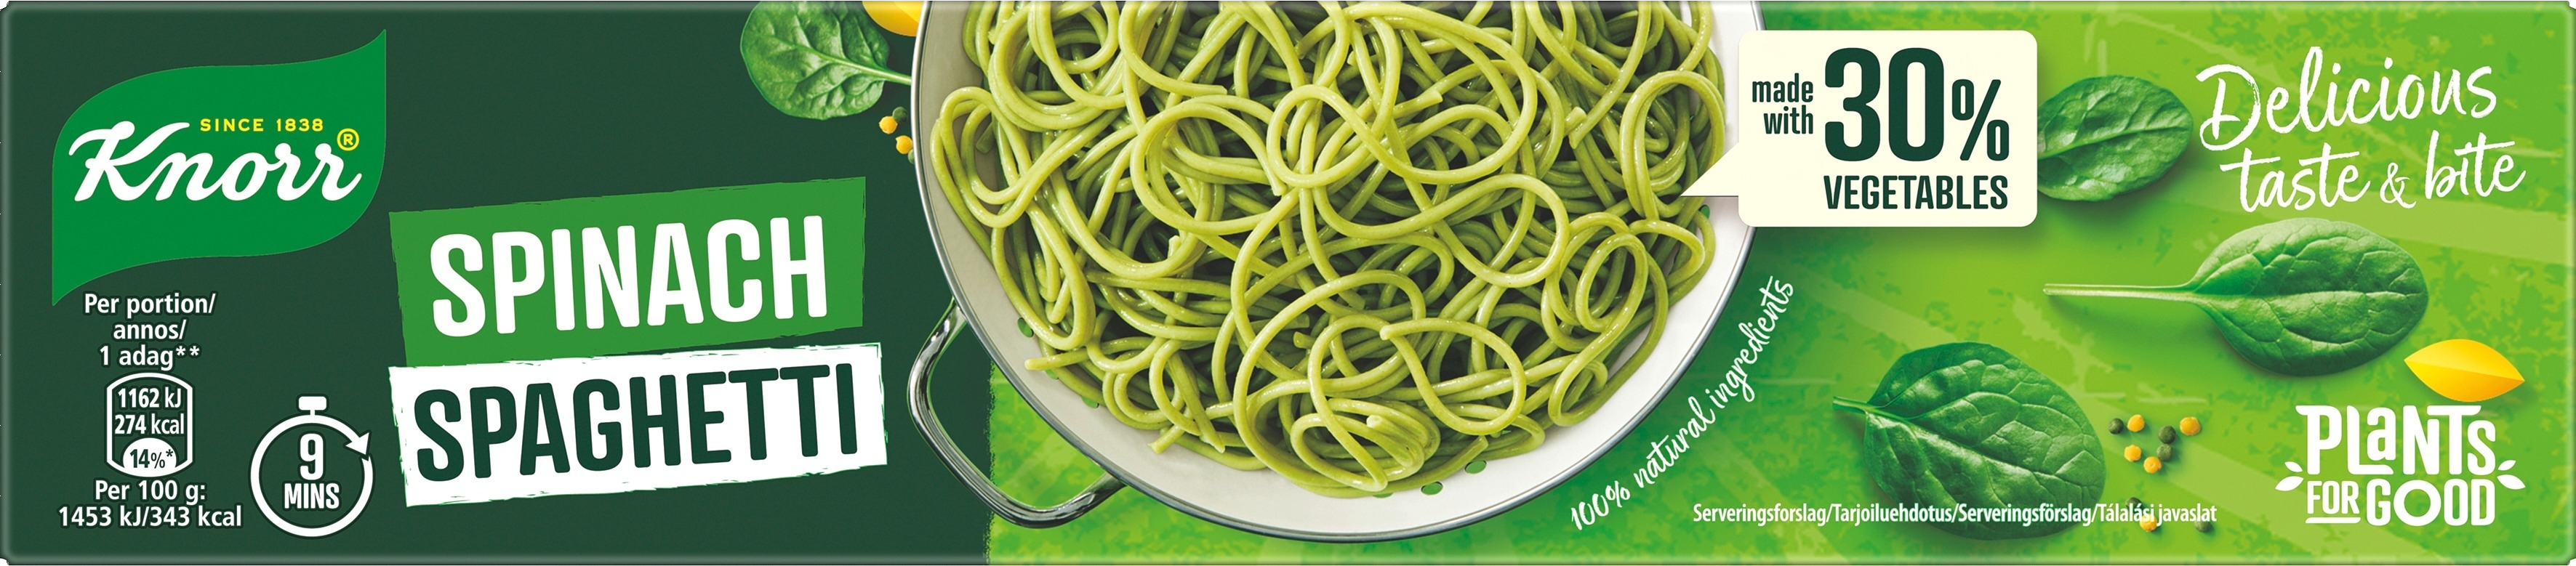 Knorr Spinach Spaghetti Pasta 300g